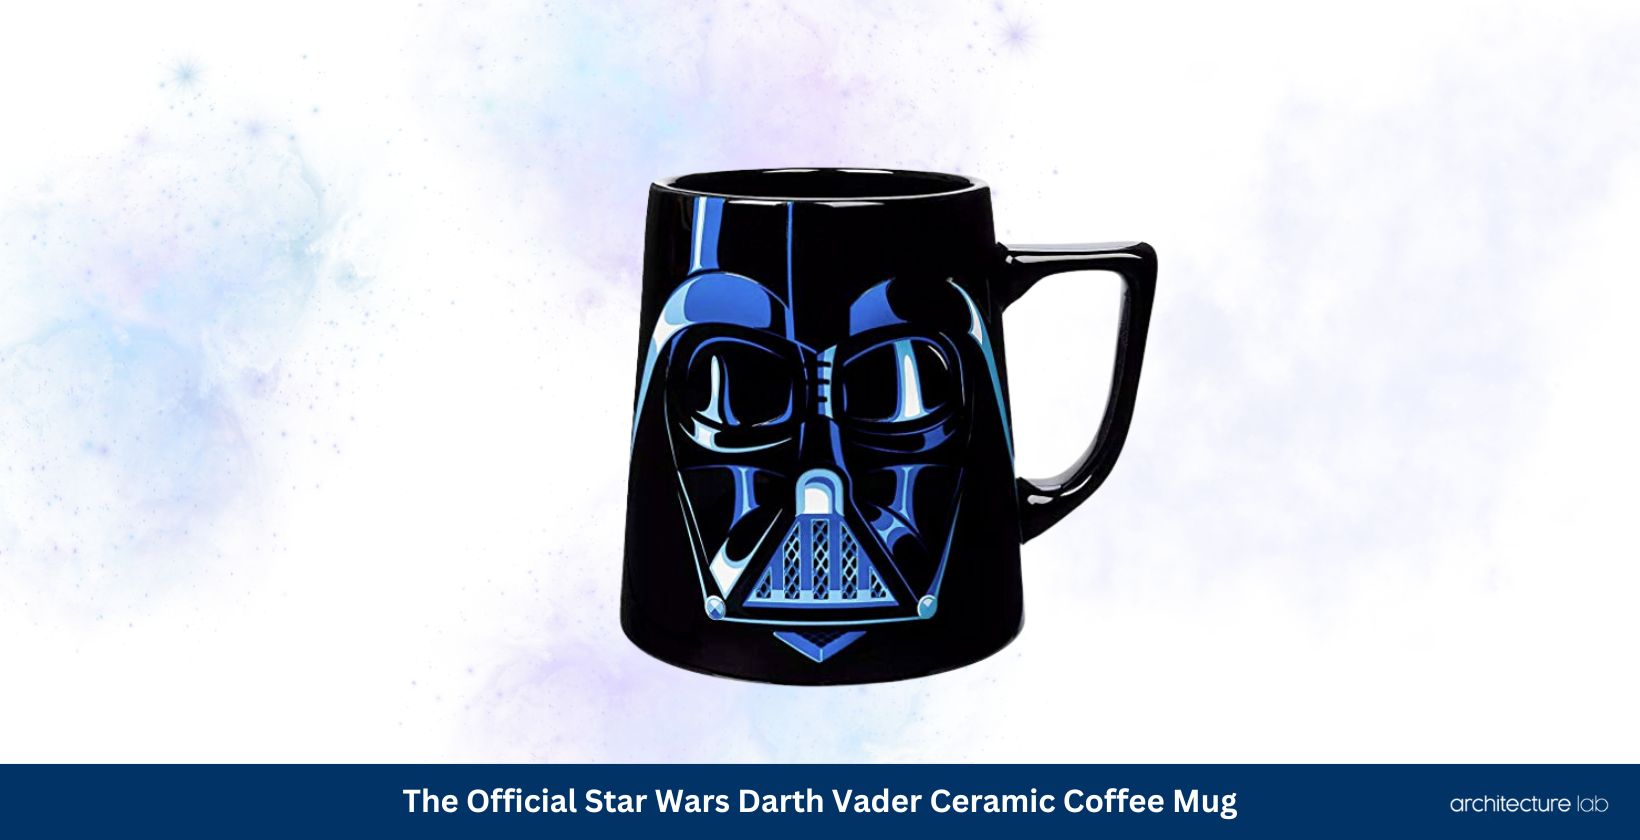 The official star wars darth vader ceramic coffee mug